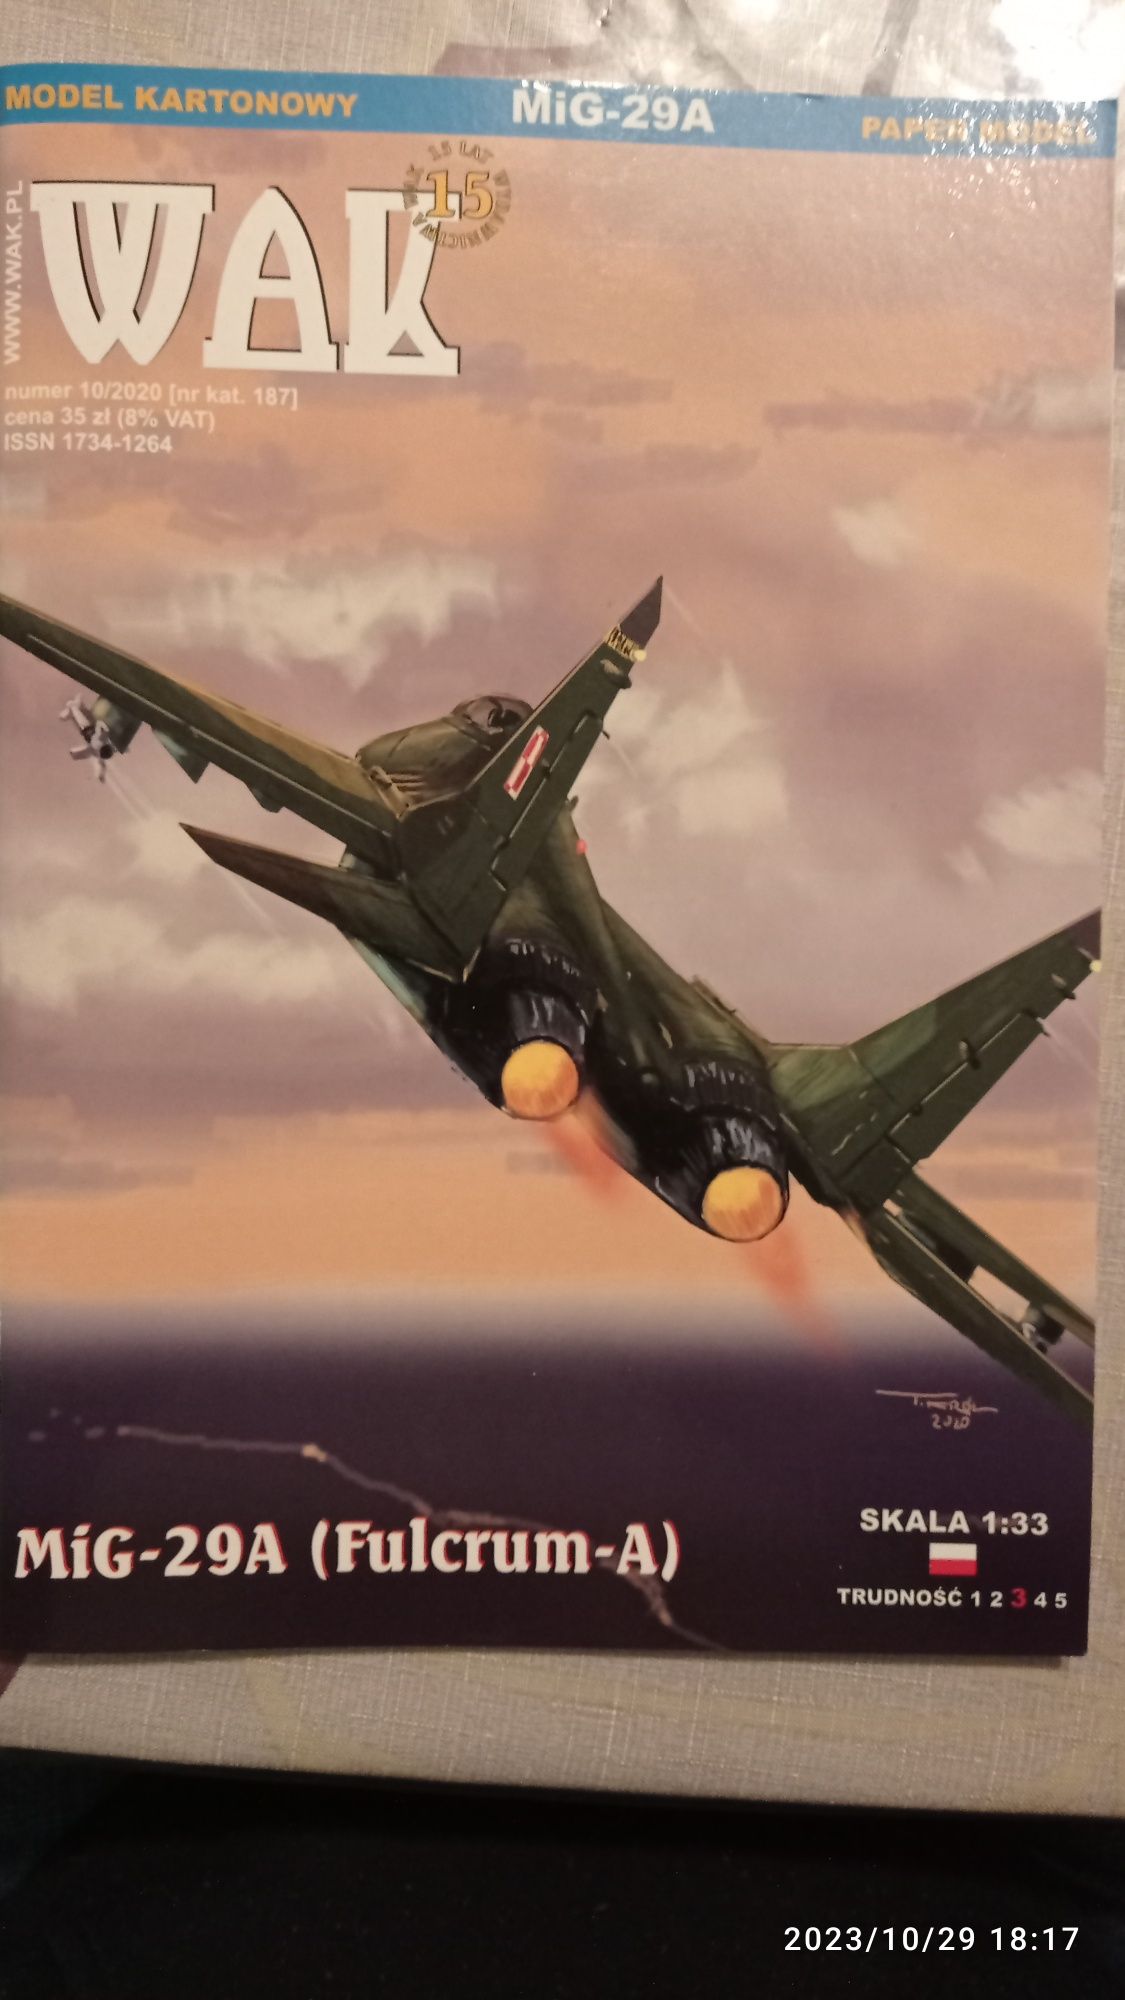 Model kartonowy MIG-29A 1:33 WAK